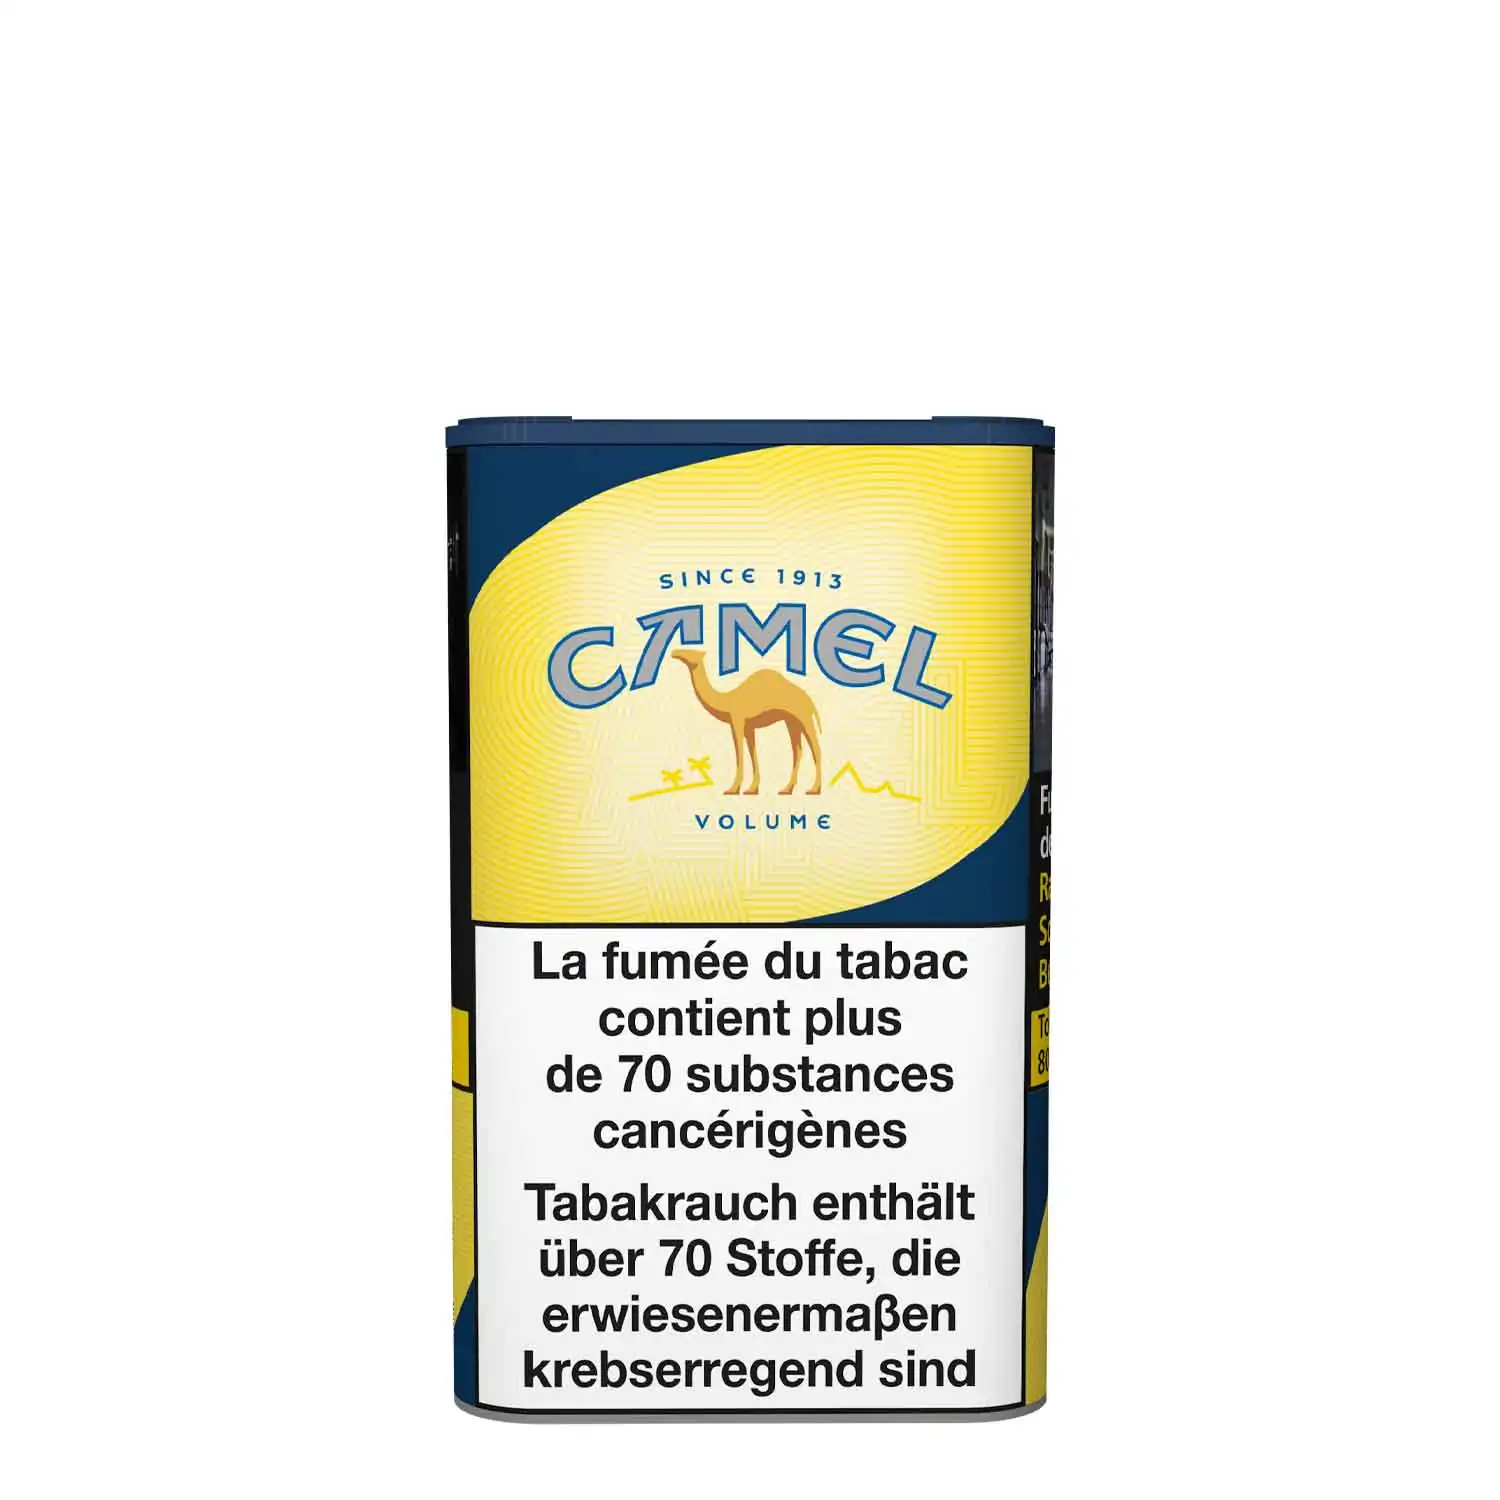 Camel volume yellow 80g - Buy at Real Tobacco